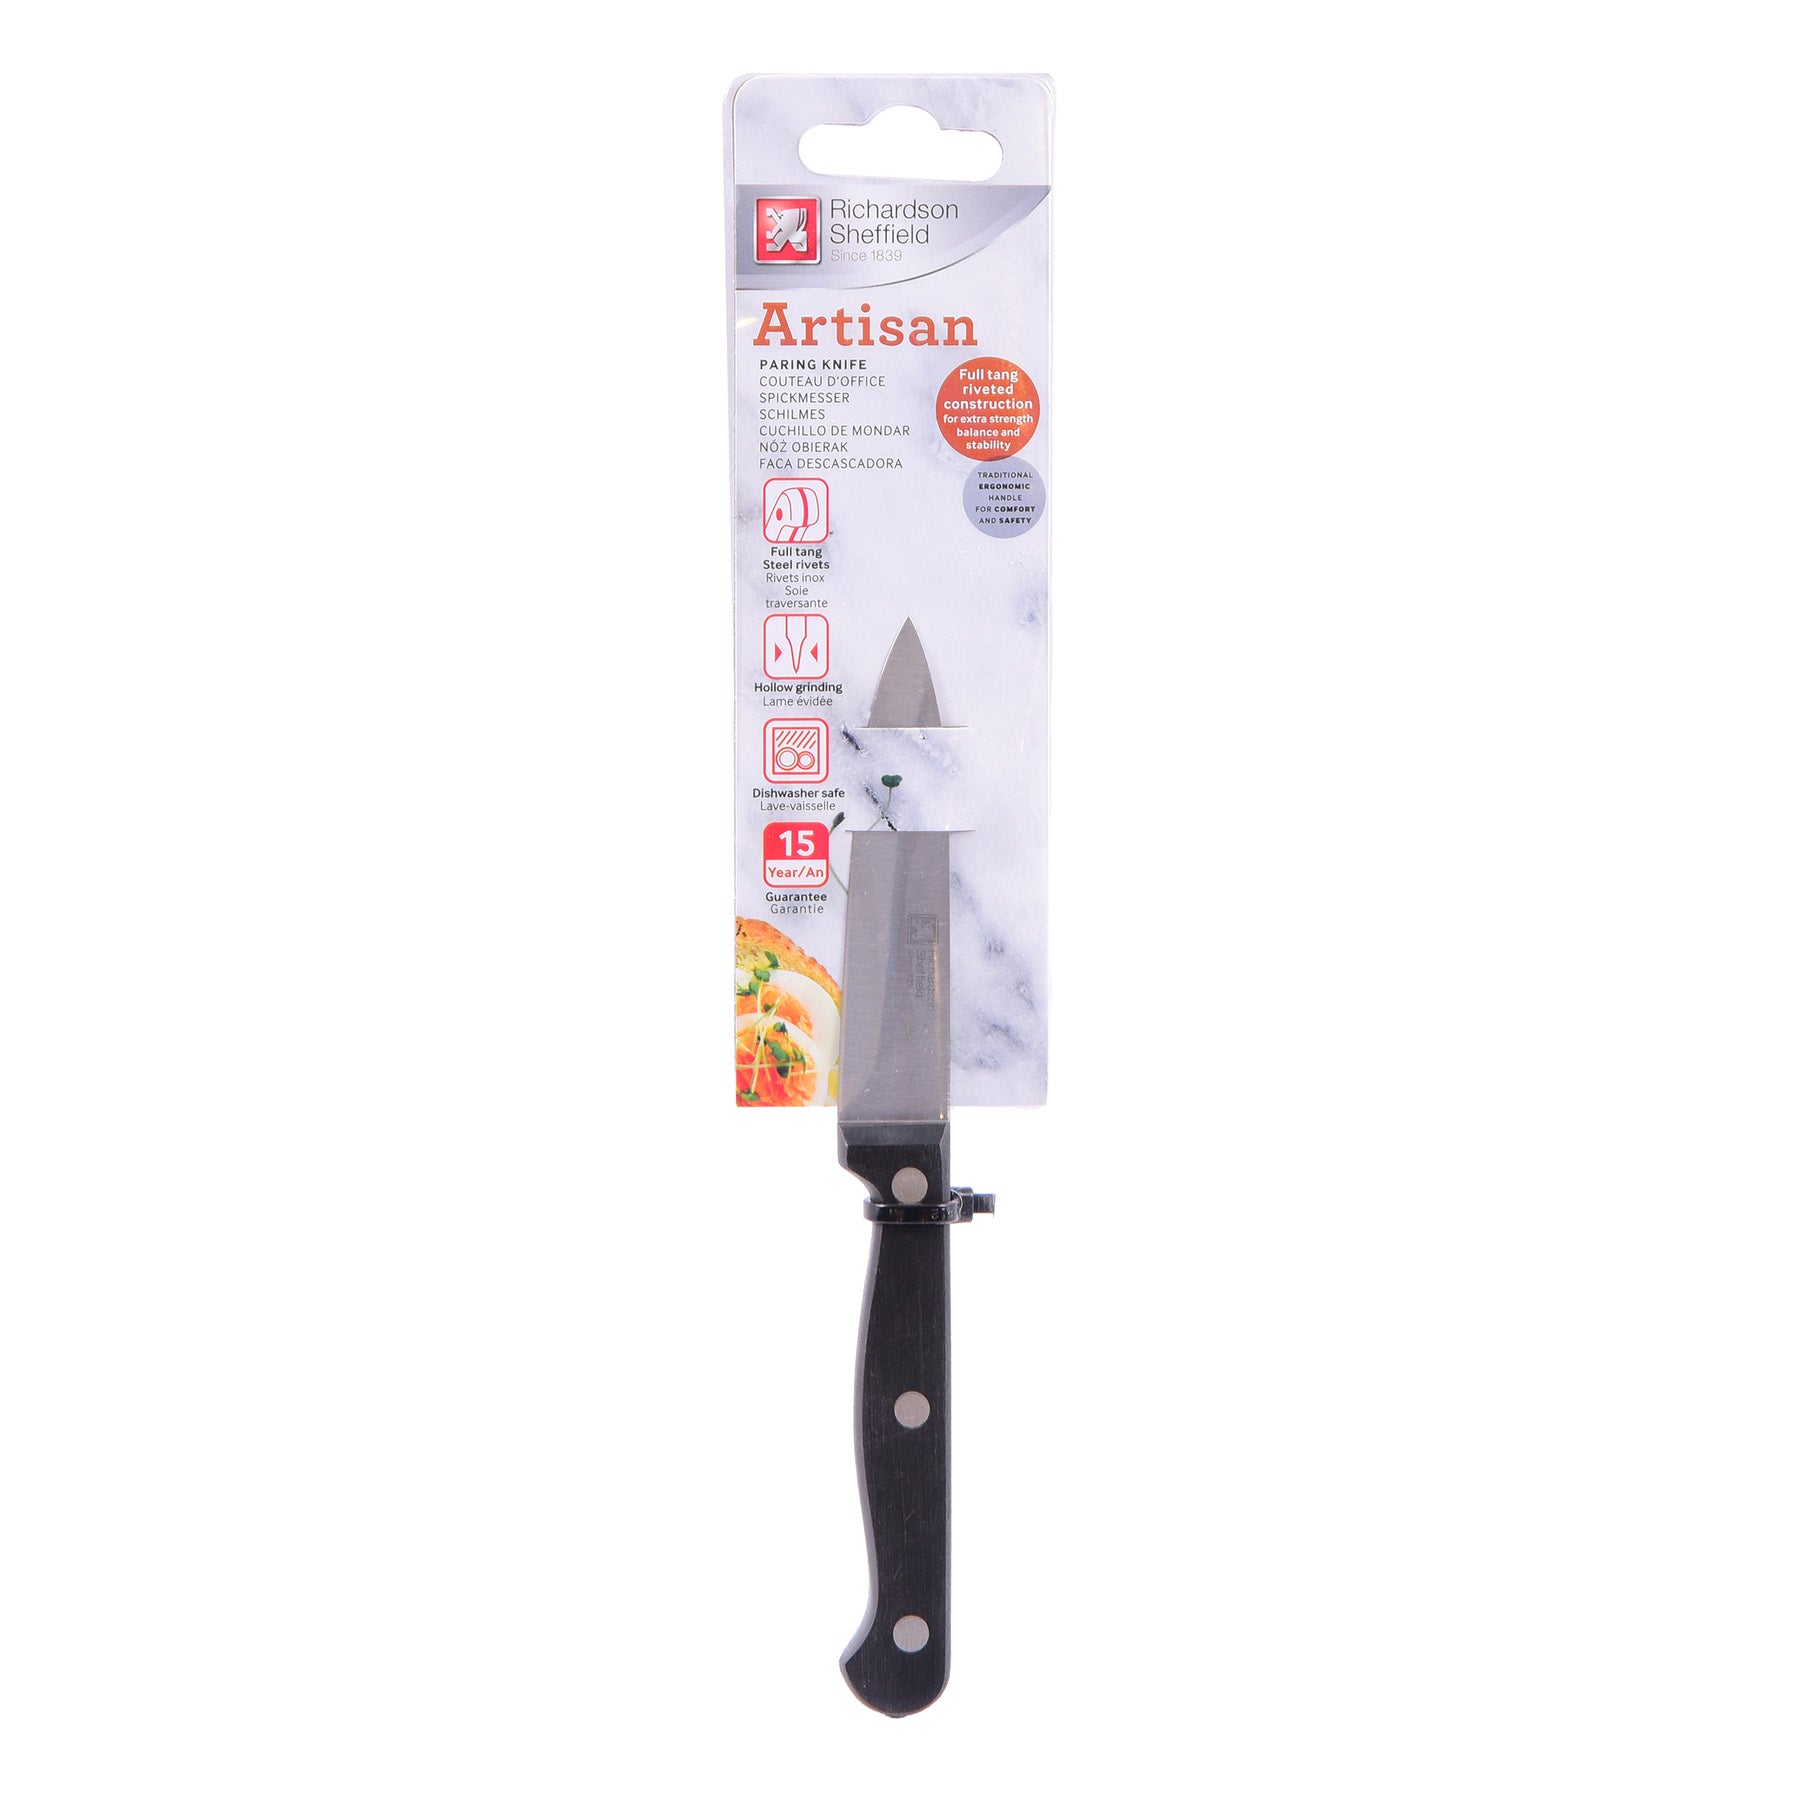 Paring Knife - Silver & black colorSize: 8.9 cm